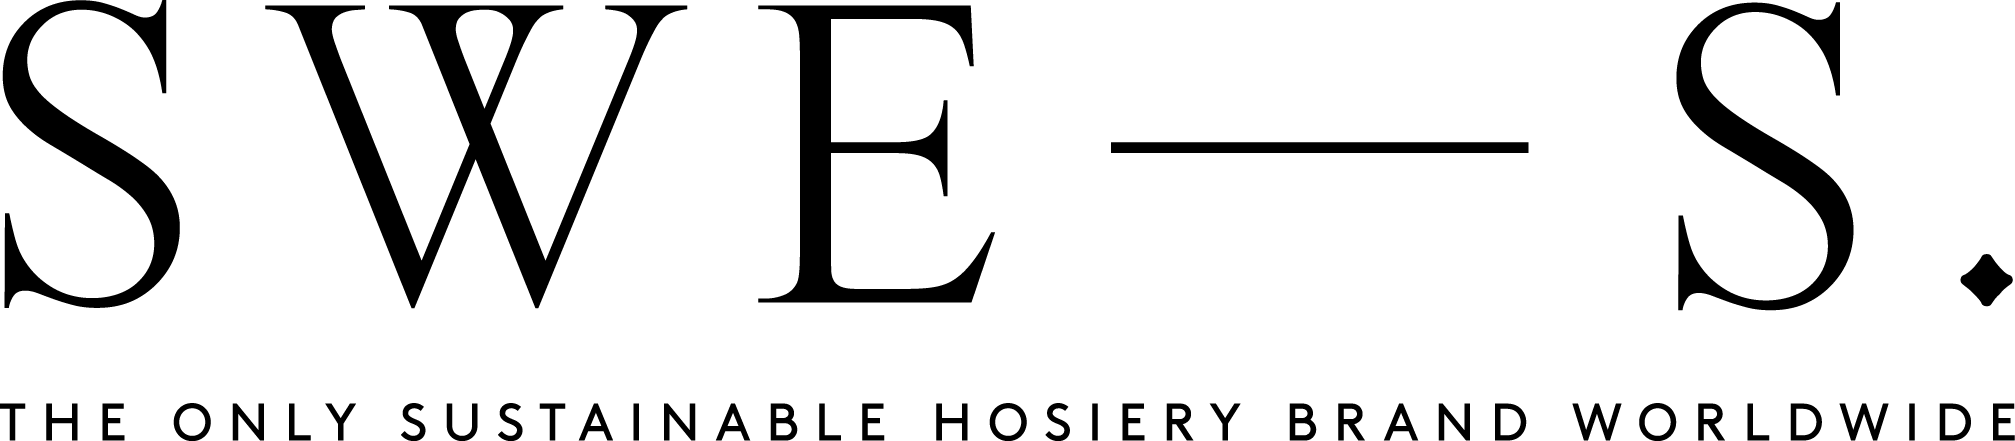 Swedish Stockings logo